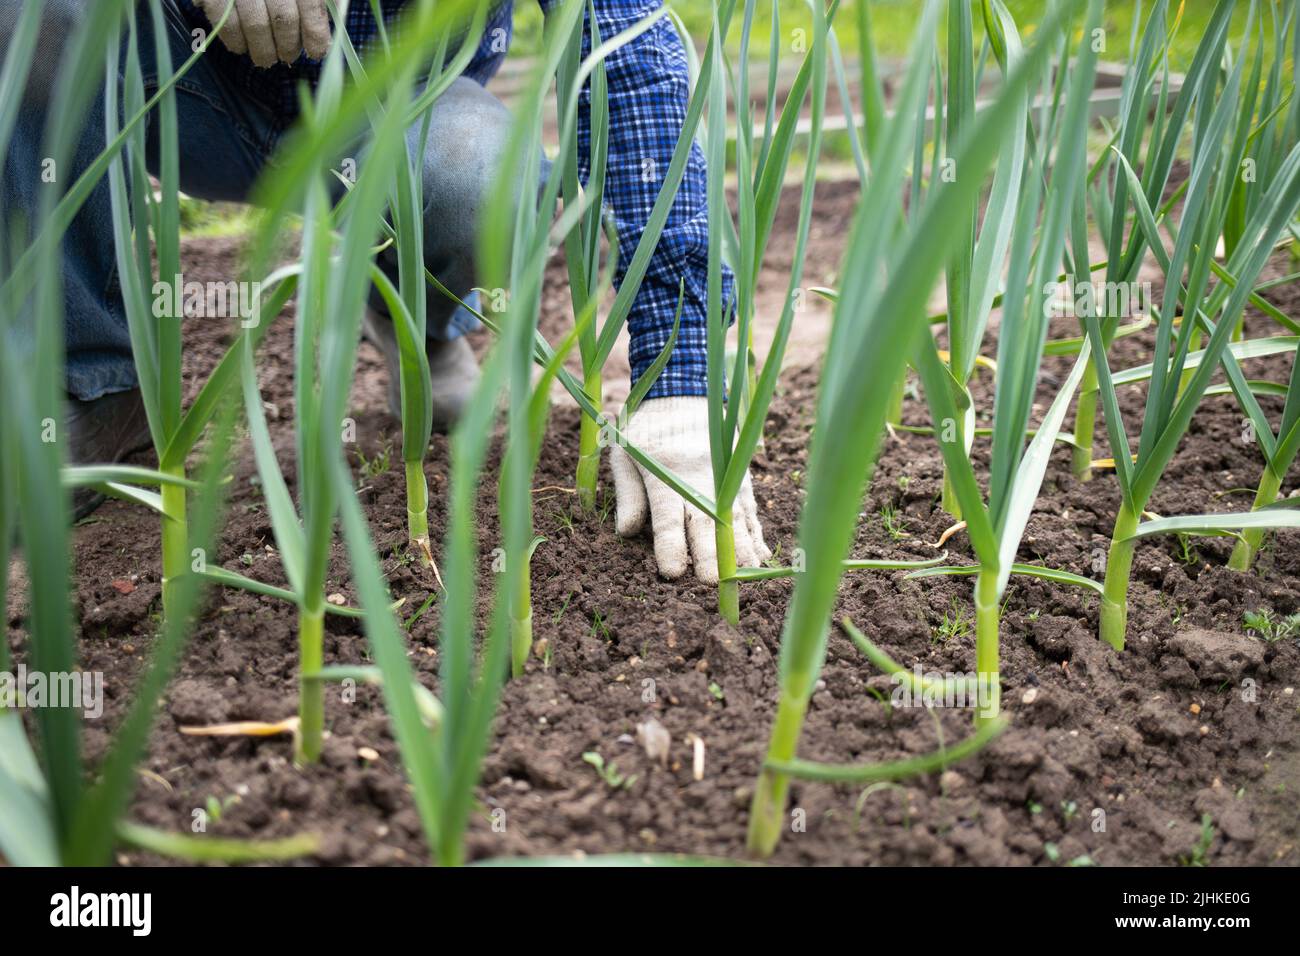 gardener's hand plants garlic, onion. weeds the beds. gardening concept Stock Photo